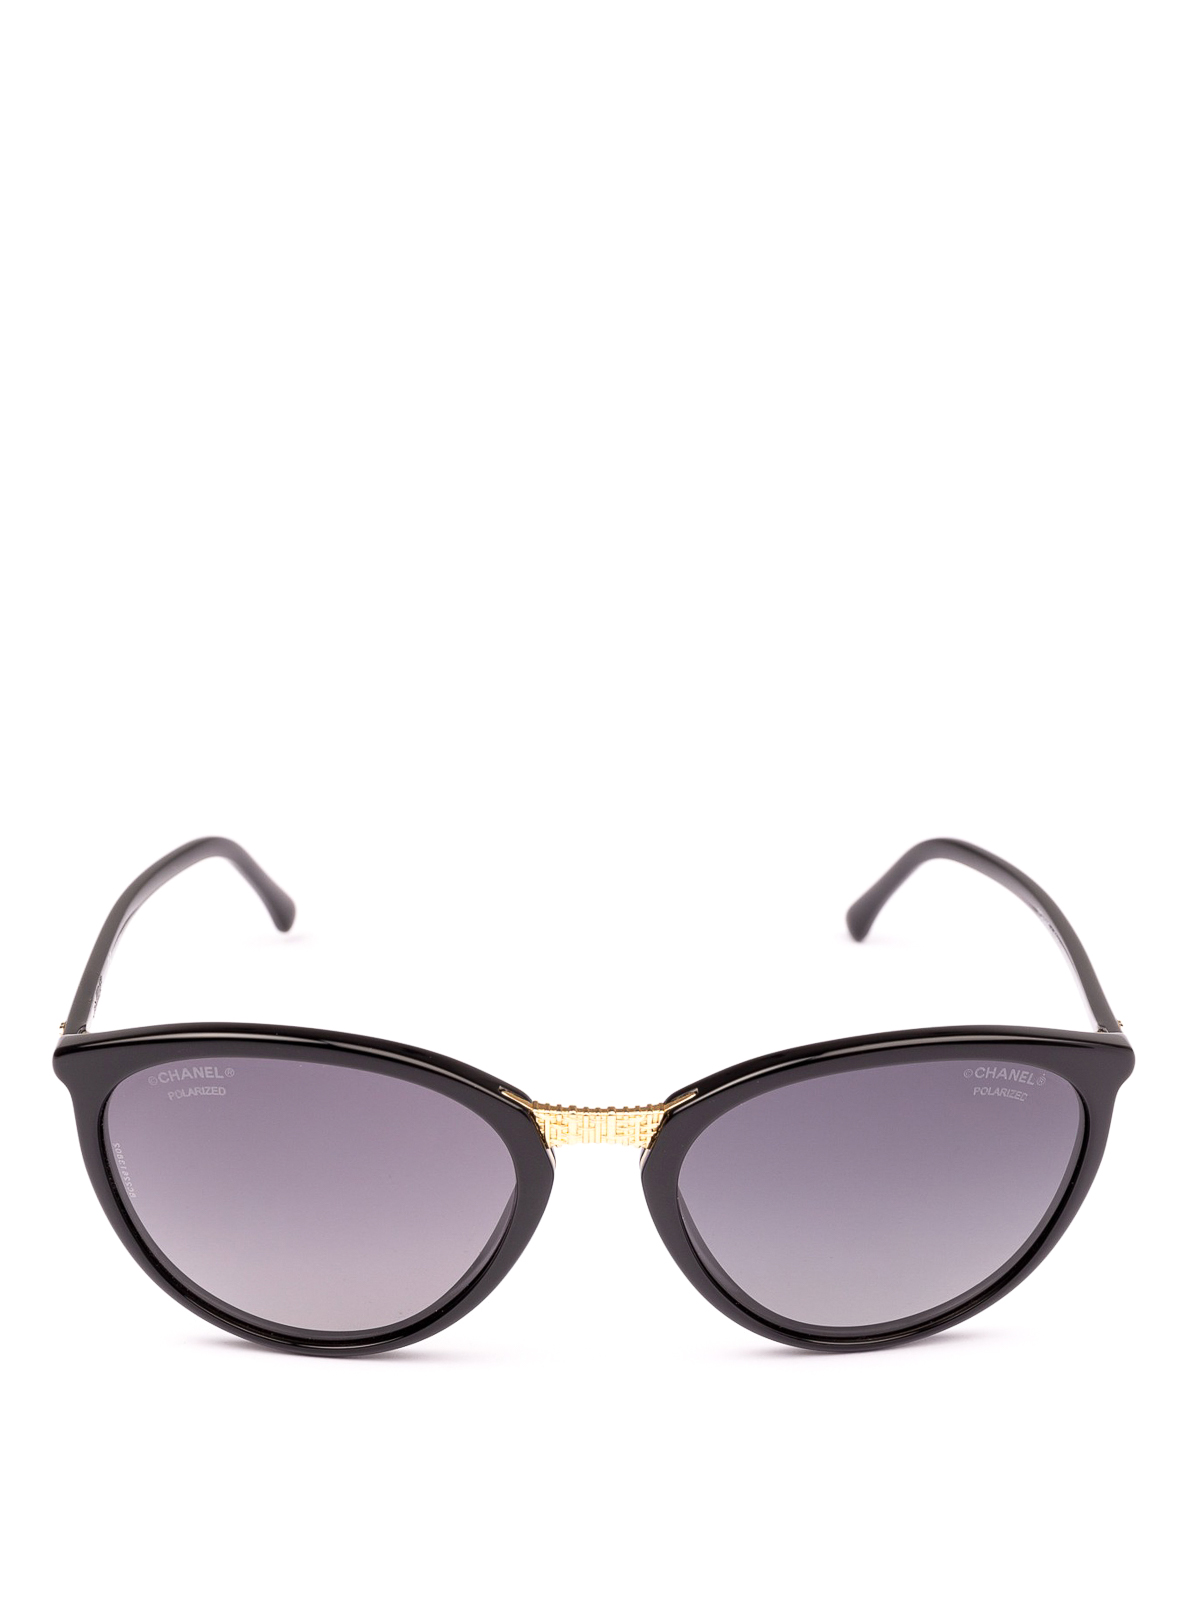 Black Butterfly Sunglasses With Golden Bridge